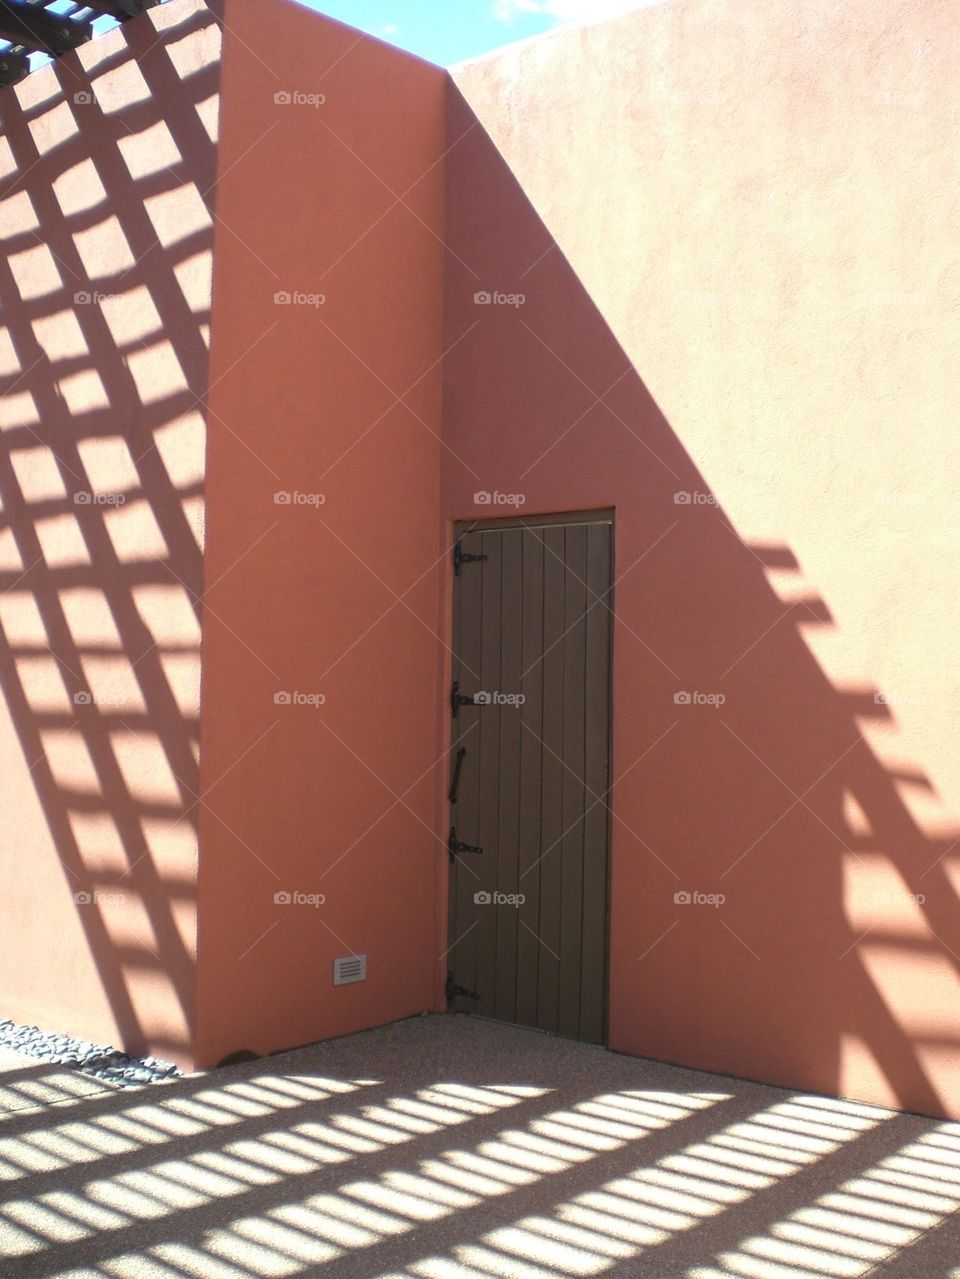 Sedona Architecture